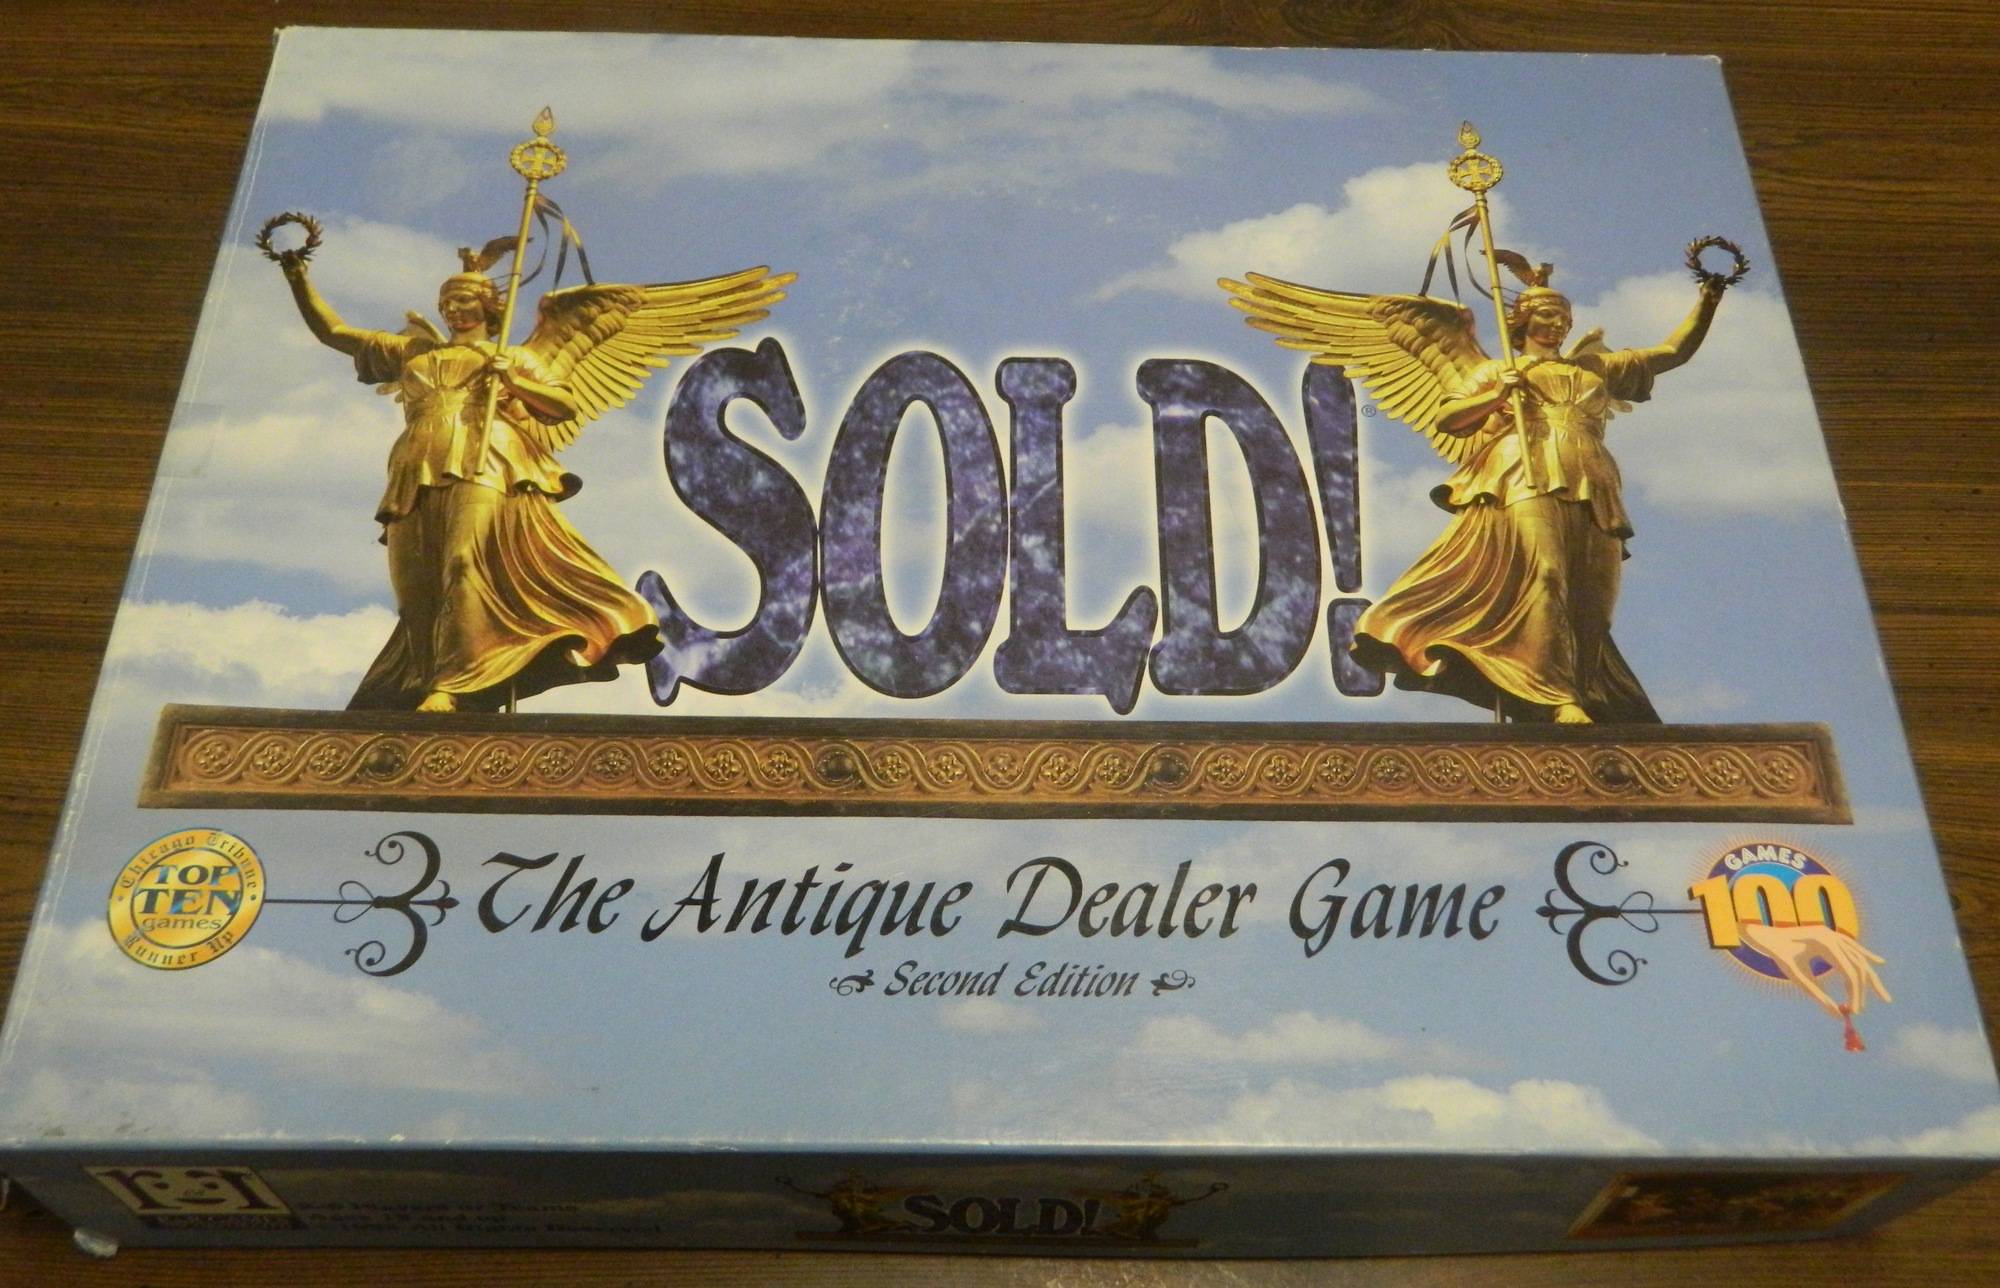 Box for Sold! The Antique Dealer Game